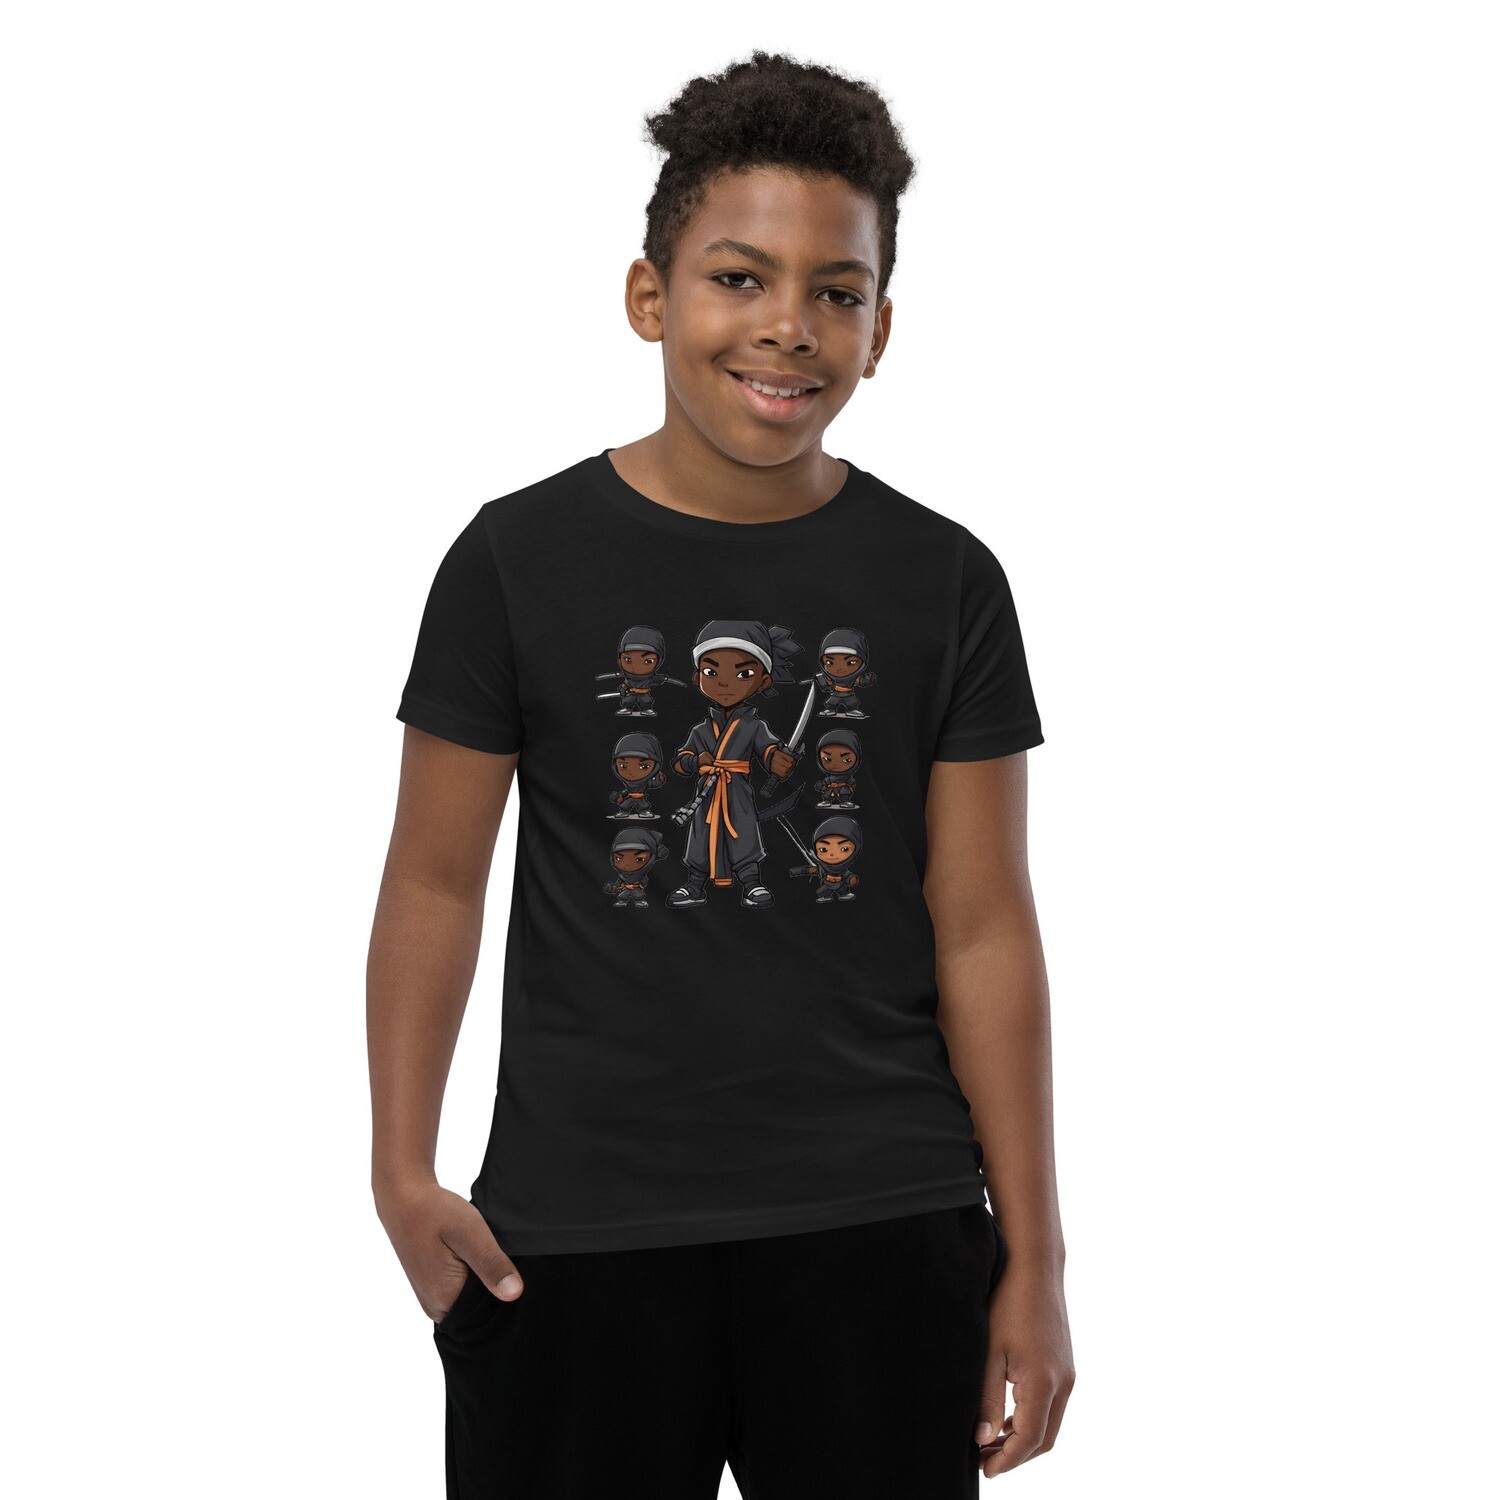 Lil Ninja 2 Boy's Youth Short Sleeve T-Shirt